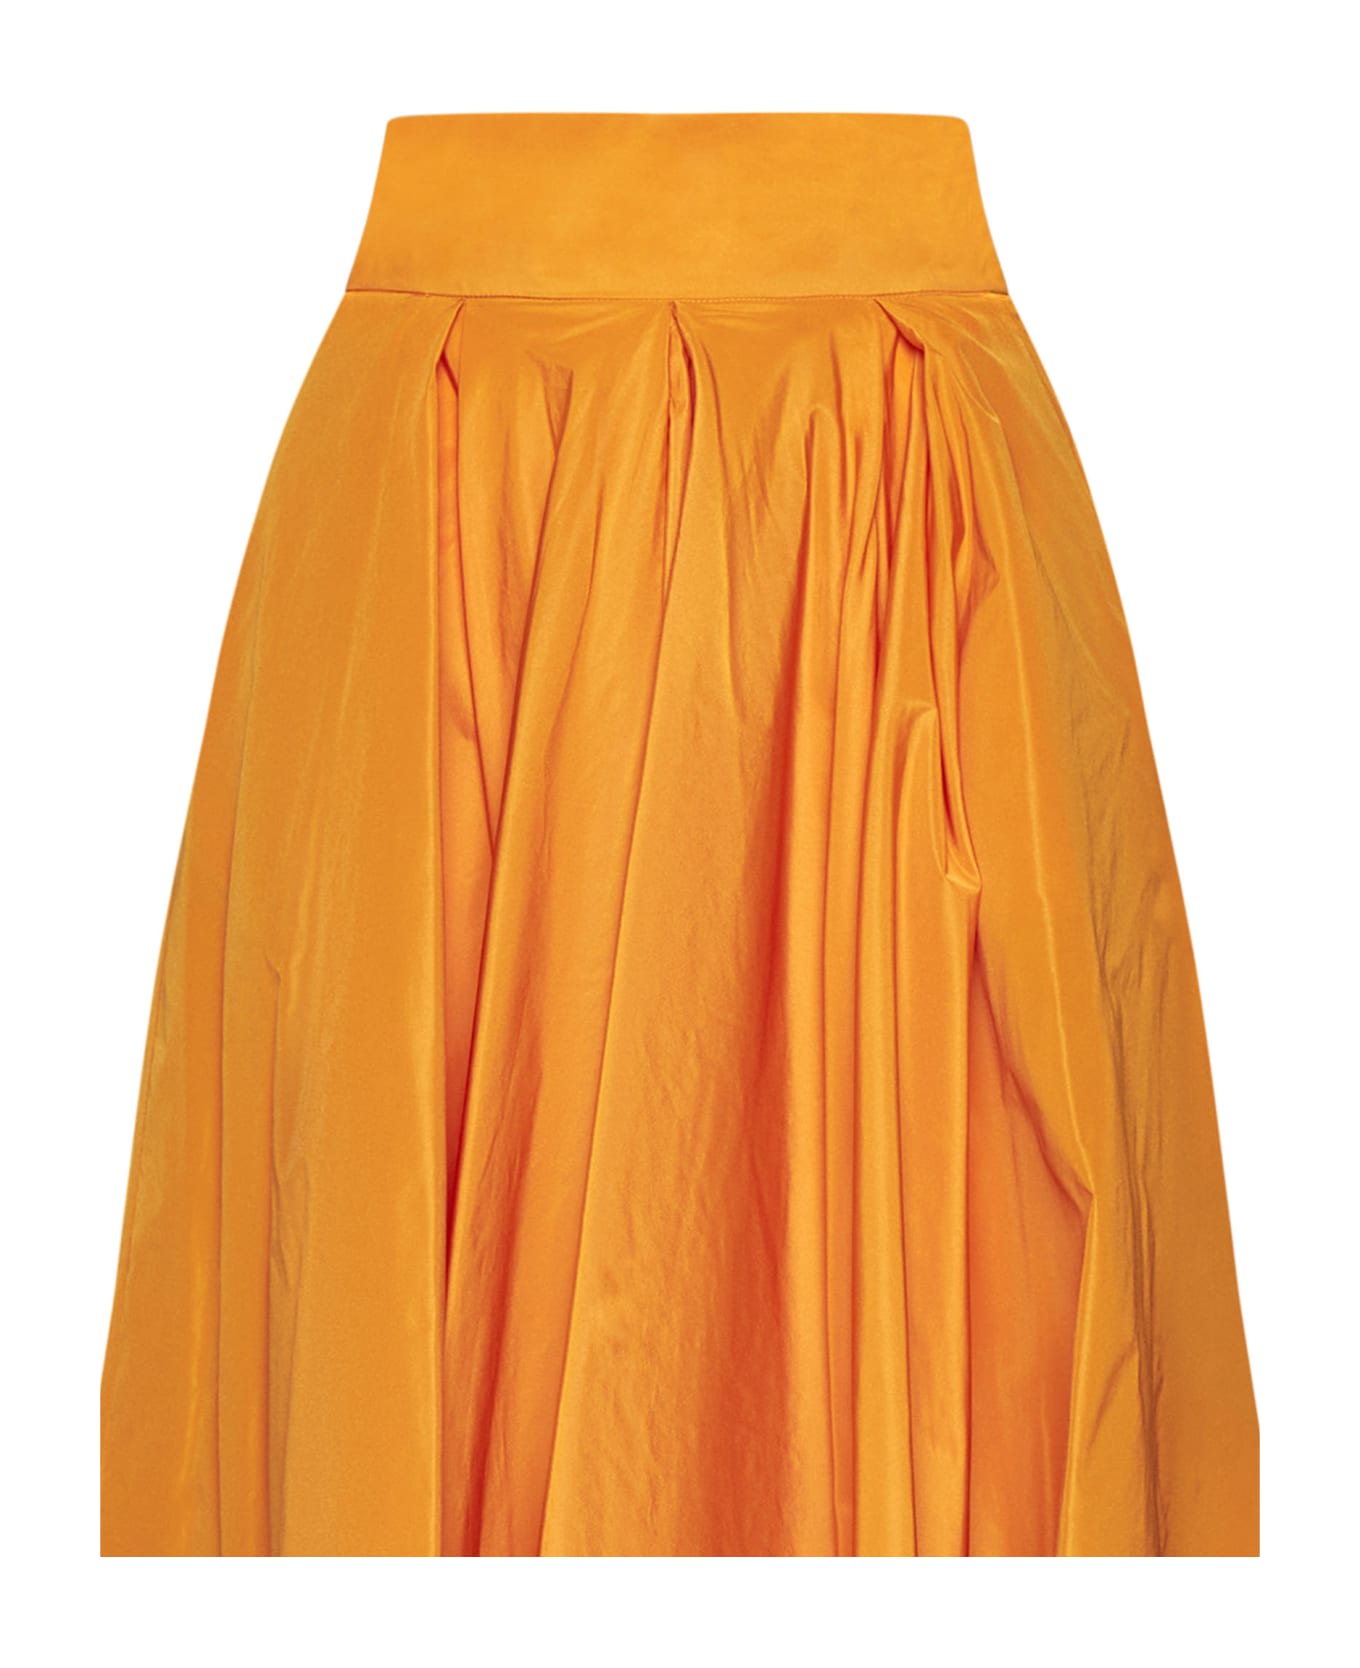 Sara Roka Skirt - Arancione スカート